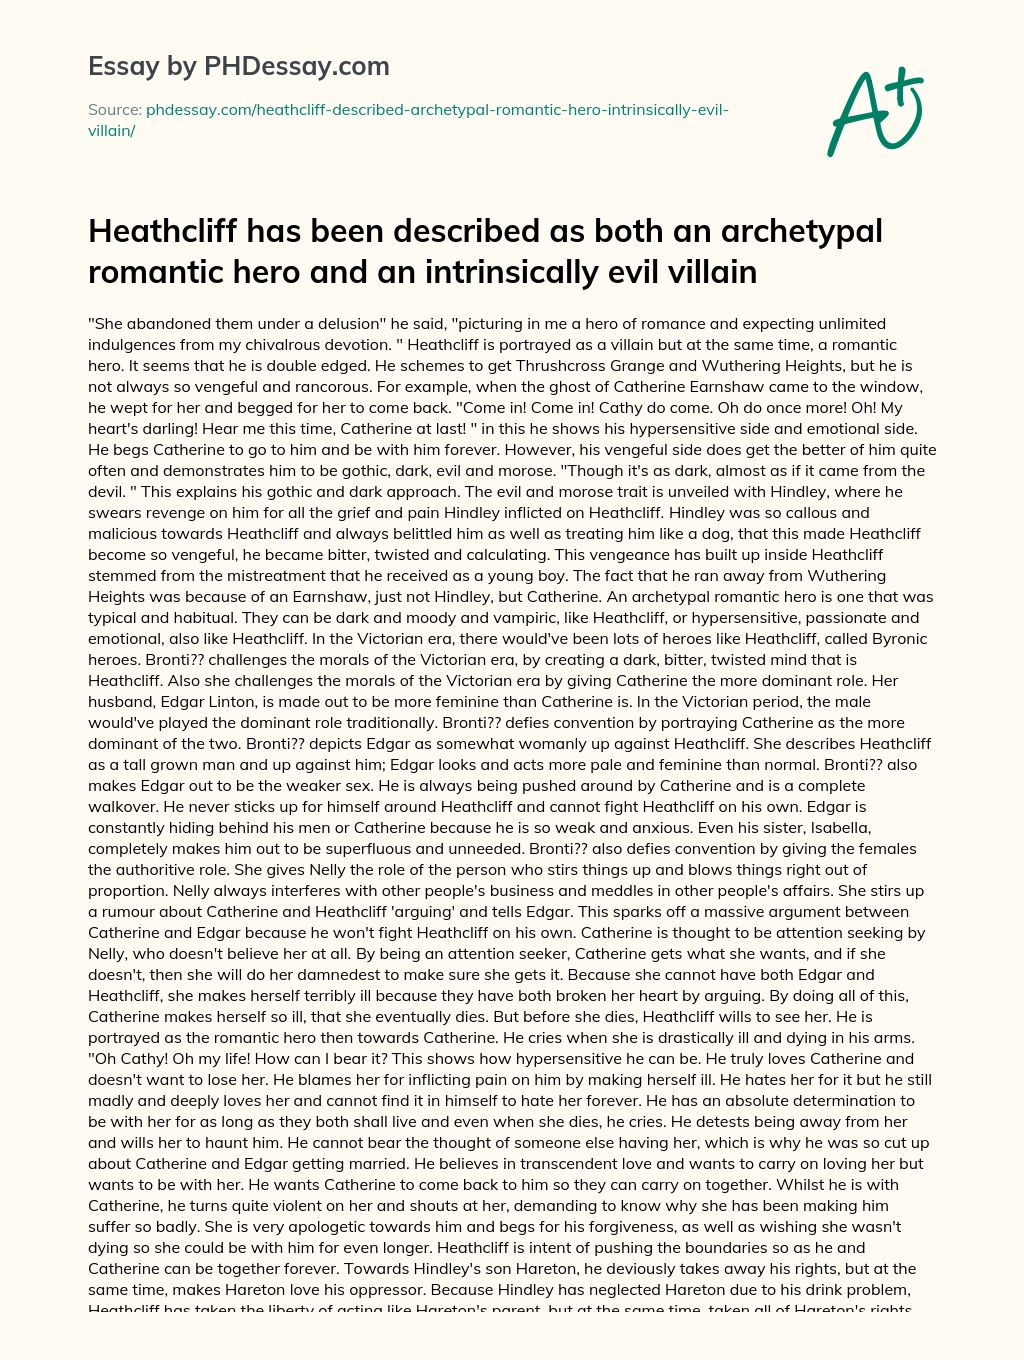 Heathcliff has been described as both an archetypal romantic hero and an intrinsically evil villain essay